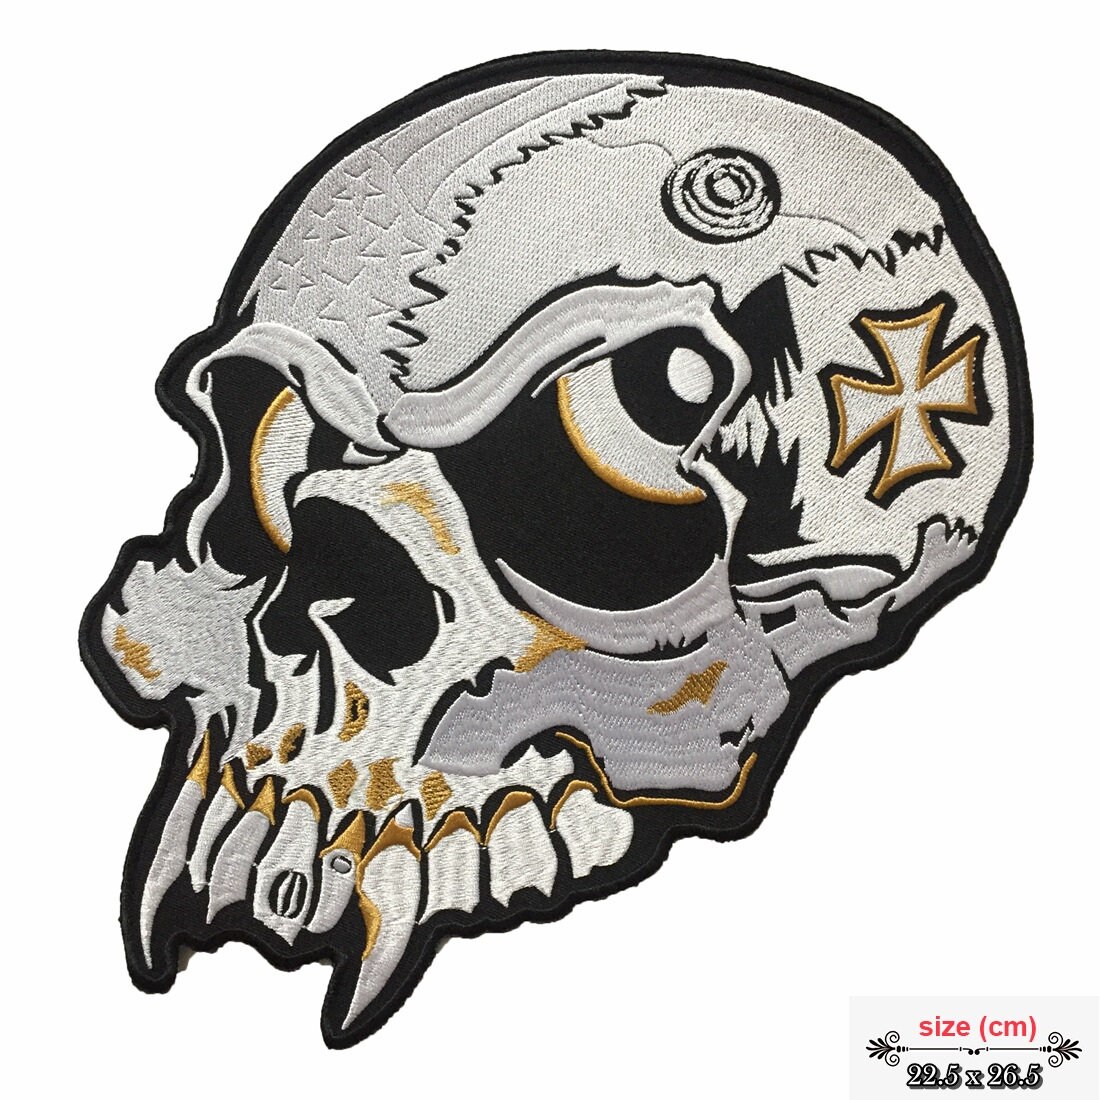 Patch - biker - Vampire Skull Cross